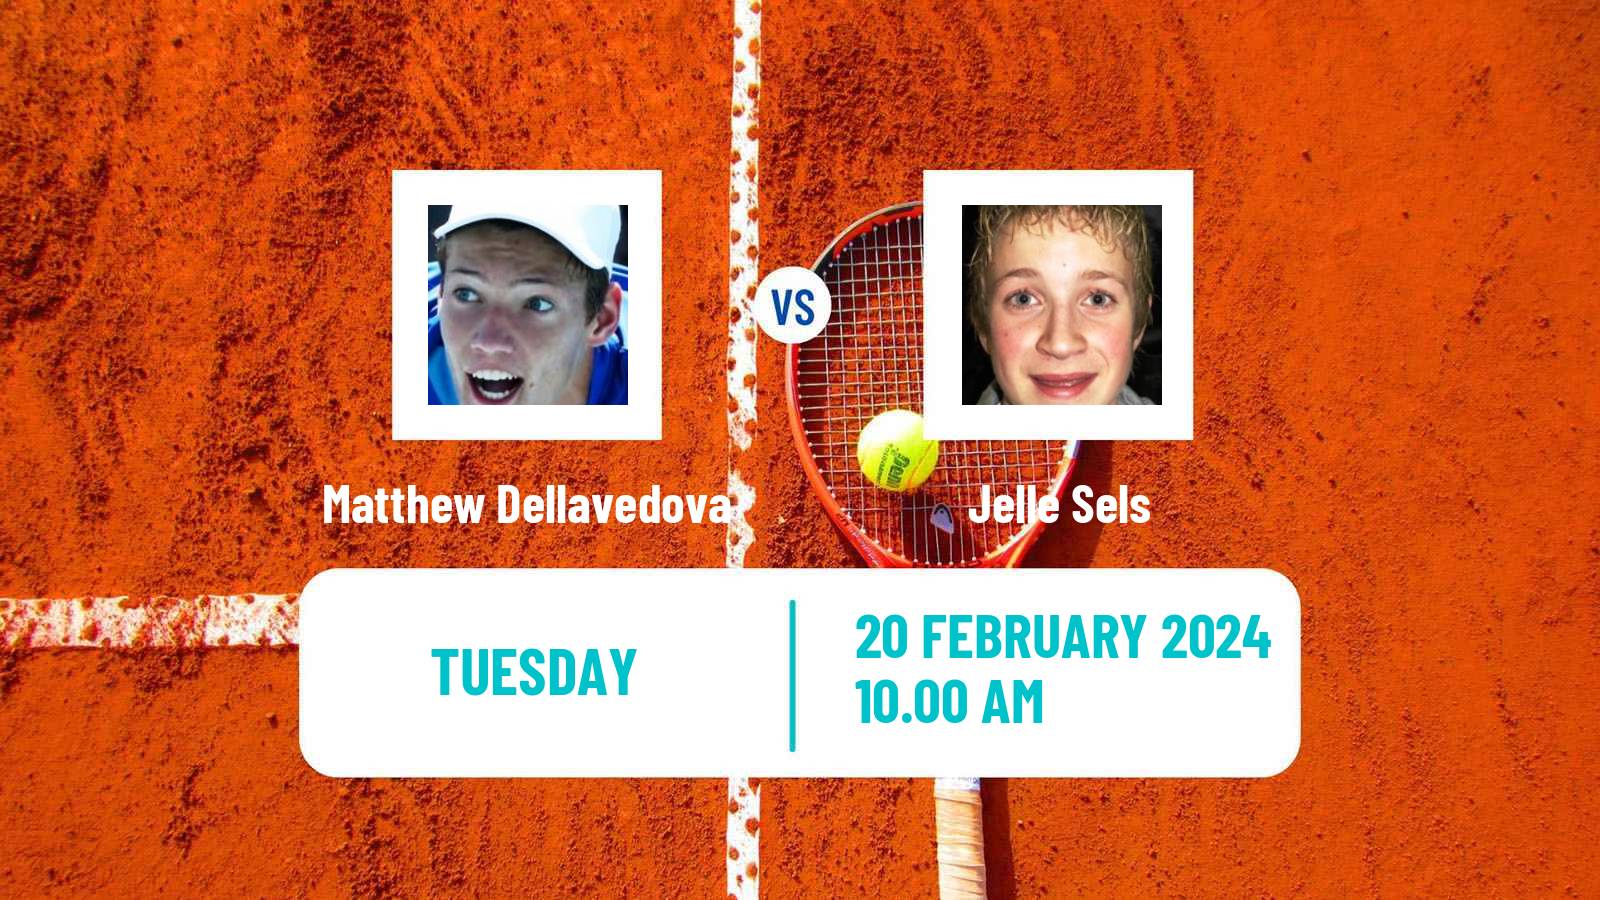 Tennis ITF M25 Vila Real De Santo Antonio 2 Men Matthew Dellavedova - Jelle Sels